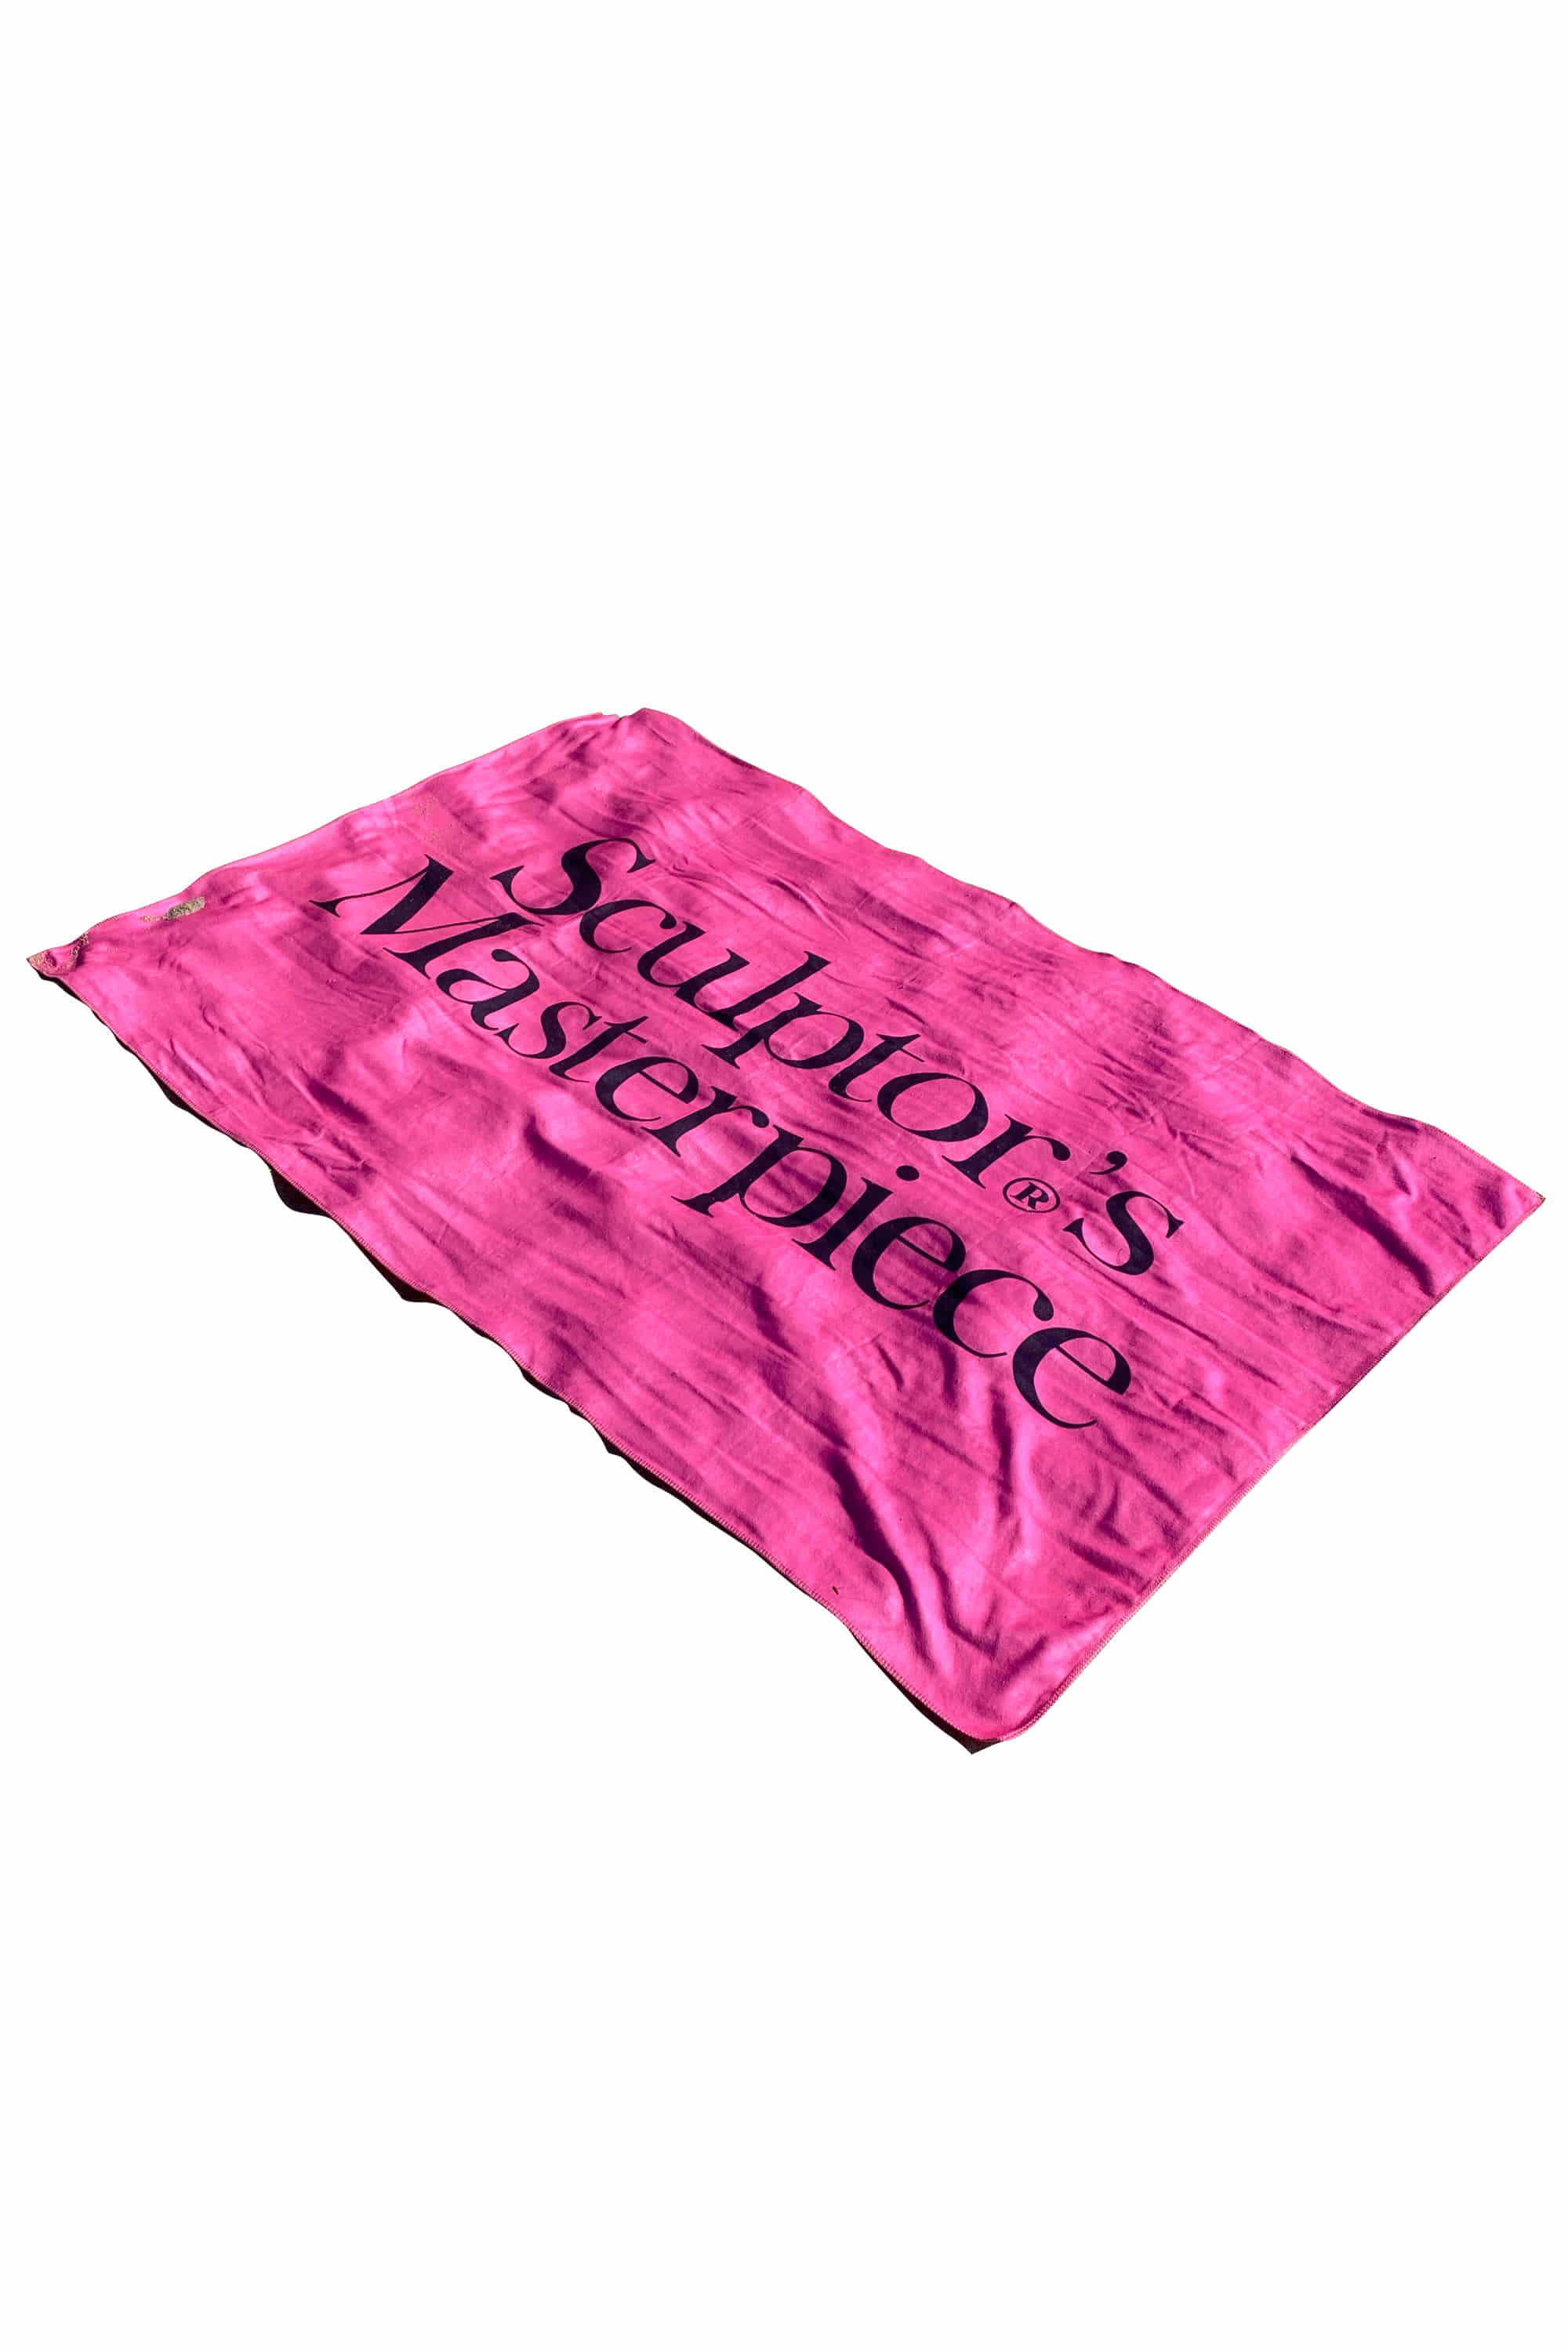 Masterpiece Beach Towel Pink